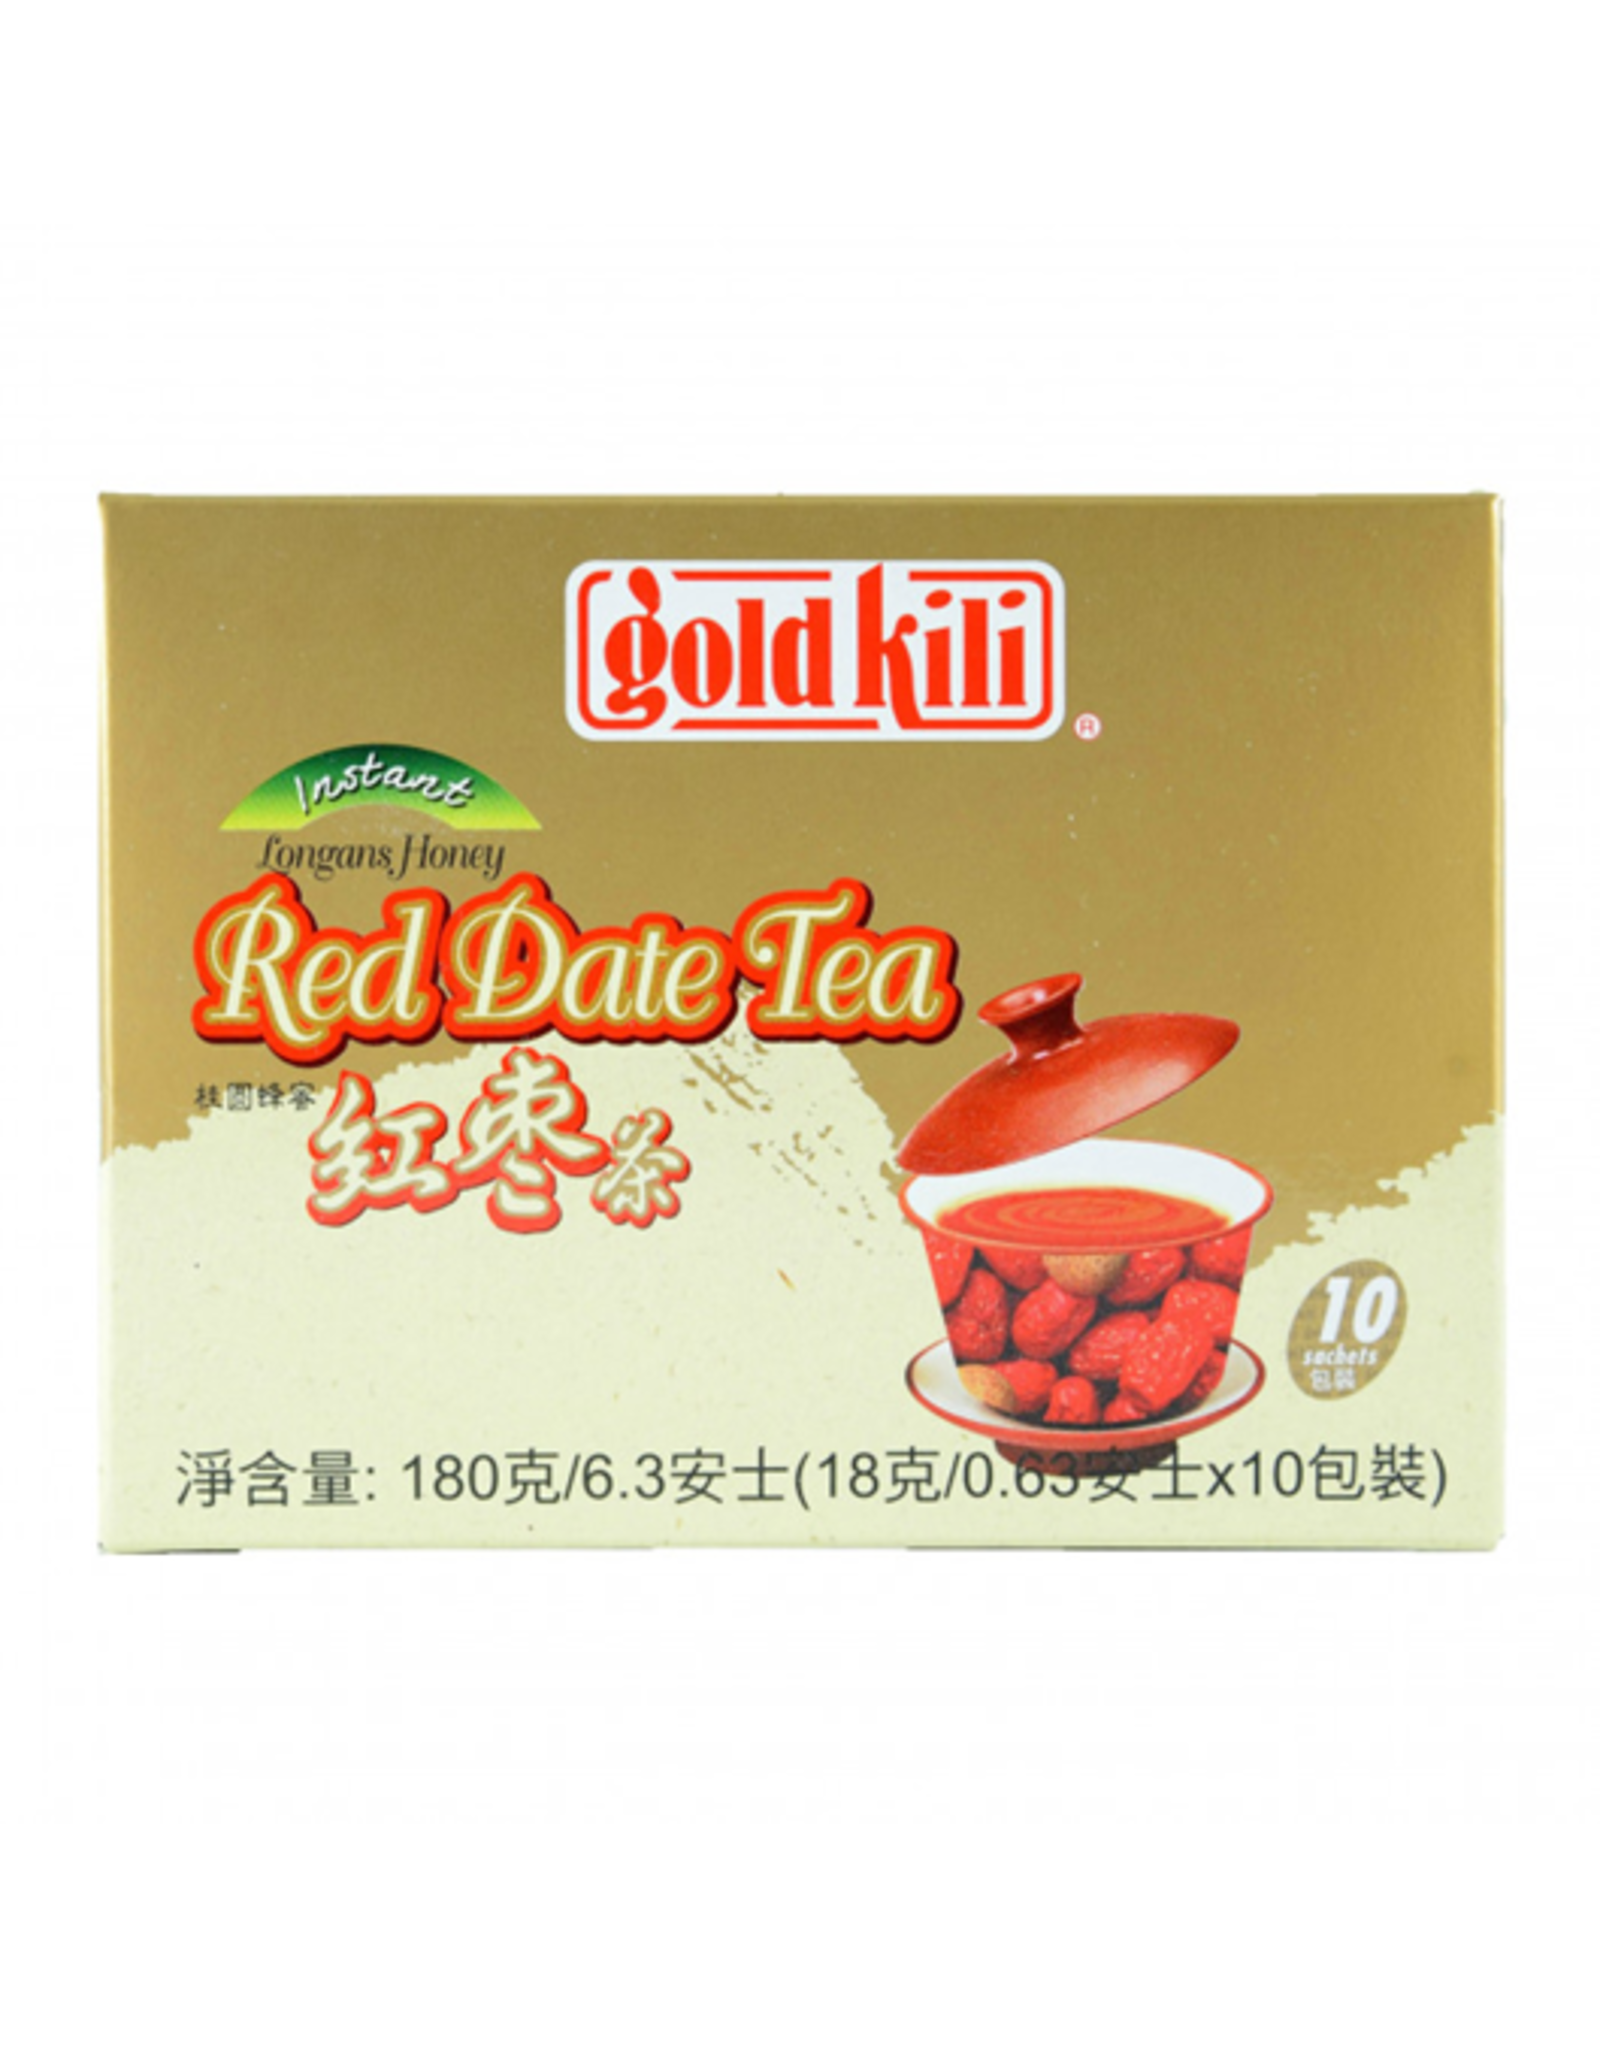 Gold Kili Red Date Tea